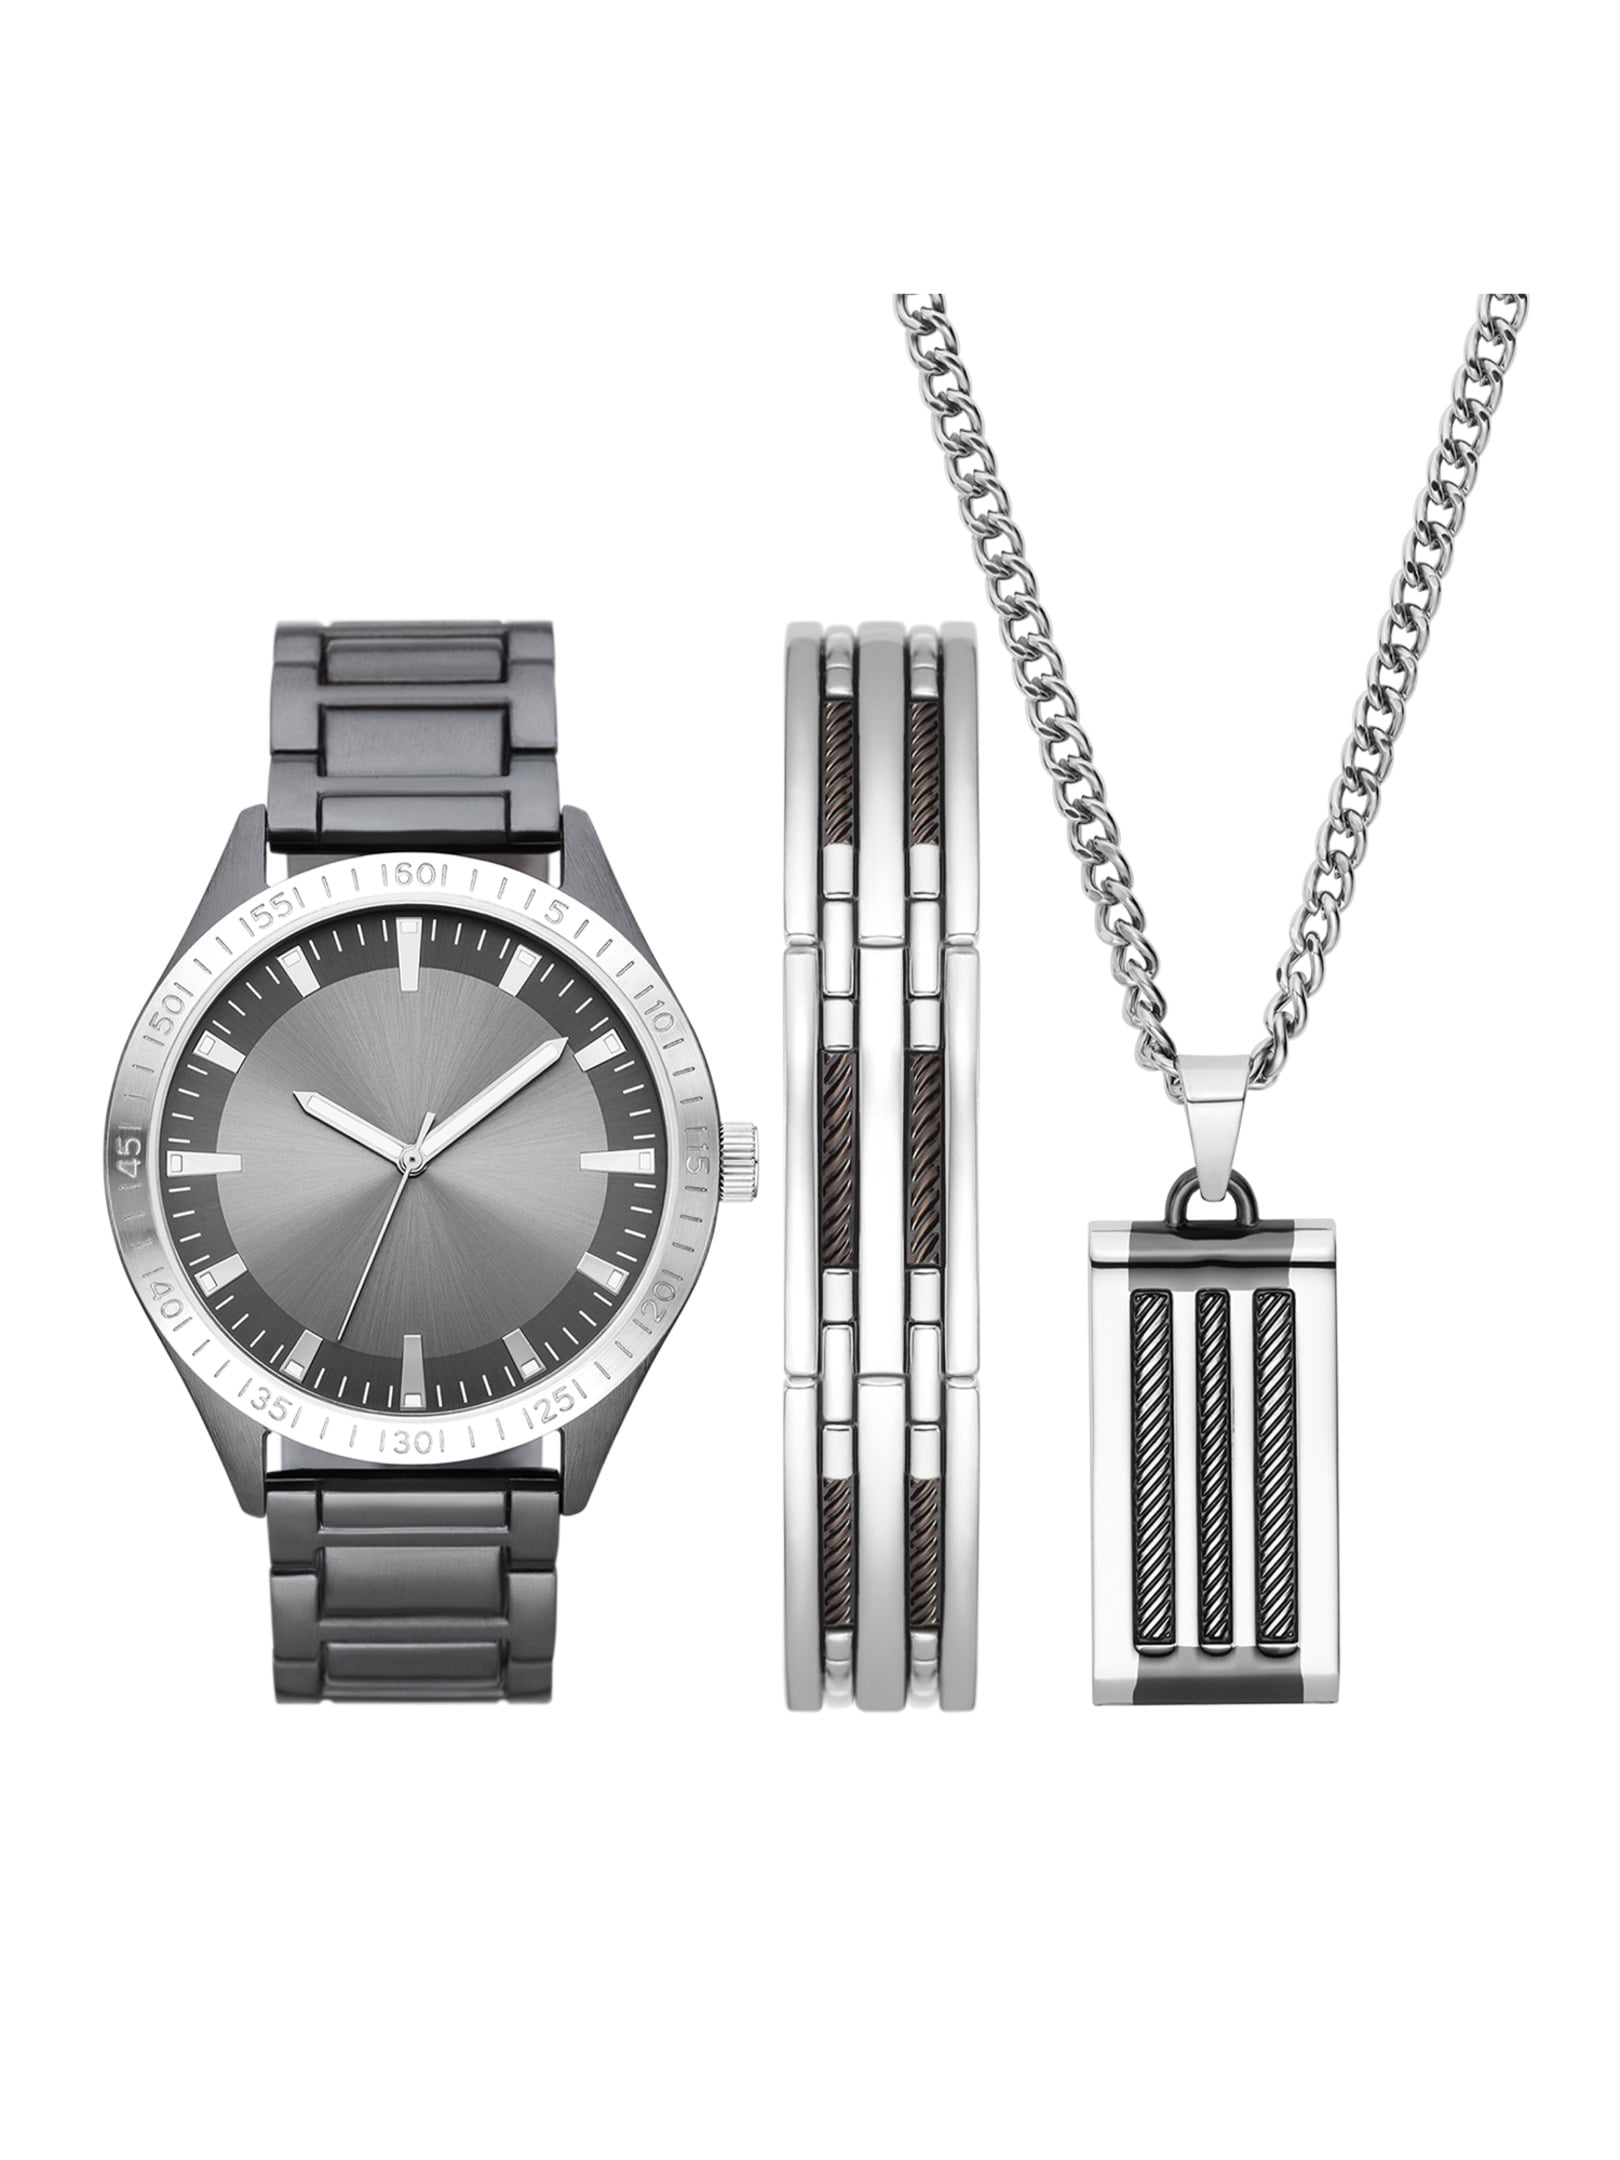 Retro Luxury Wide Cuff Watch Calendar Decorative Small Dial Leather Strap  Men Wrist Watch, Grey-Black : Amazon.in: Fashion